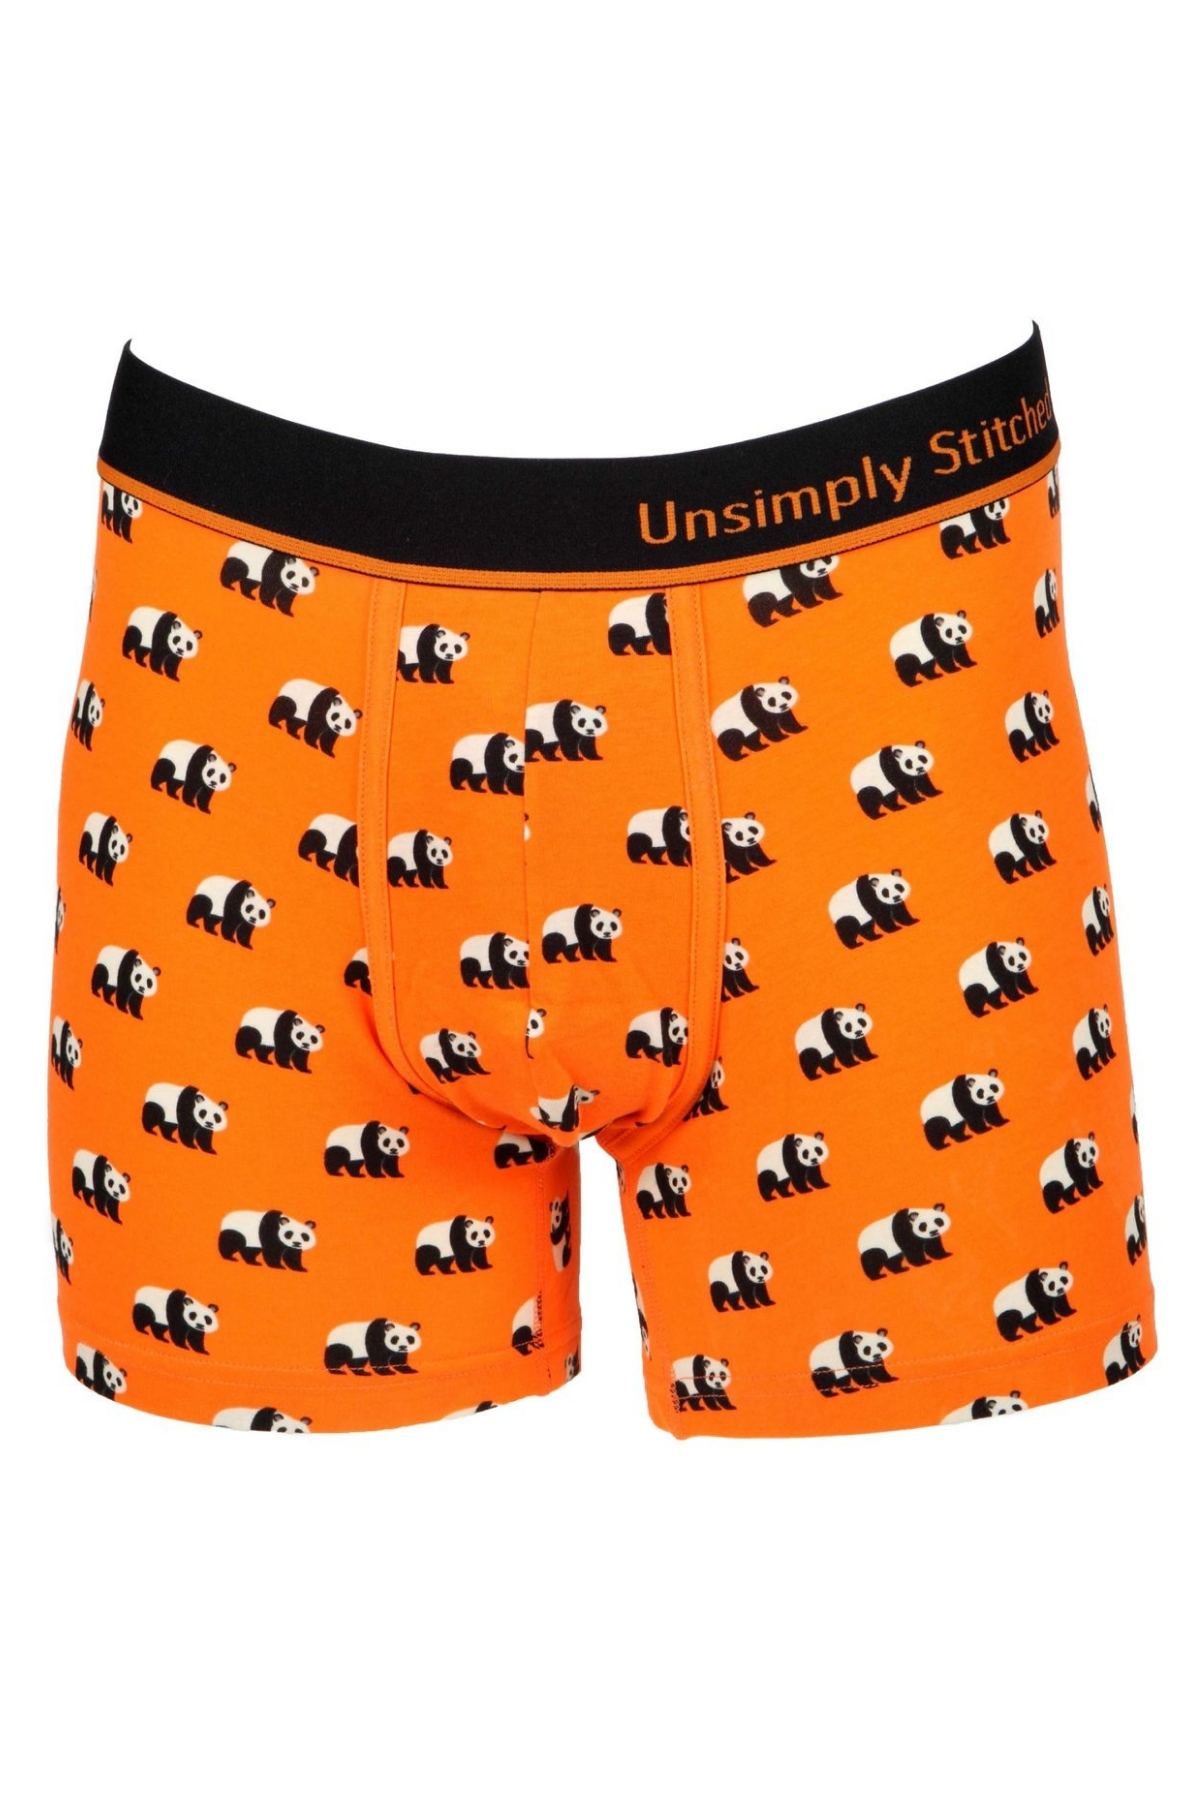 Unsimply Stitched Orange Panda Boxer Brief | CheapUndies